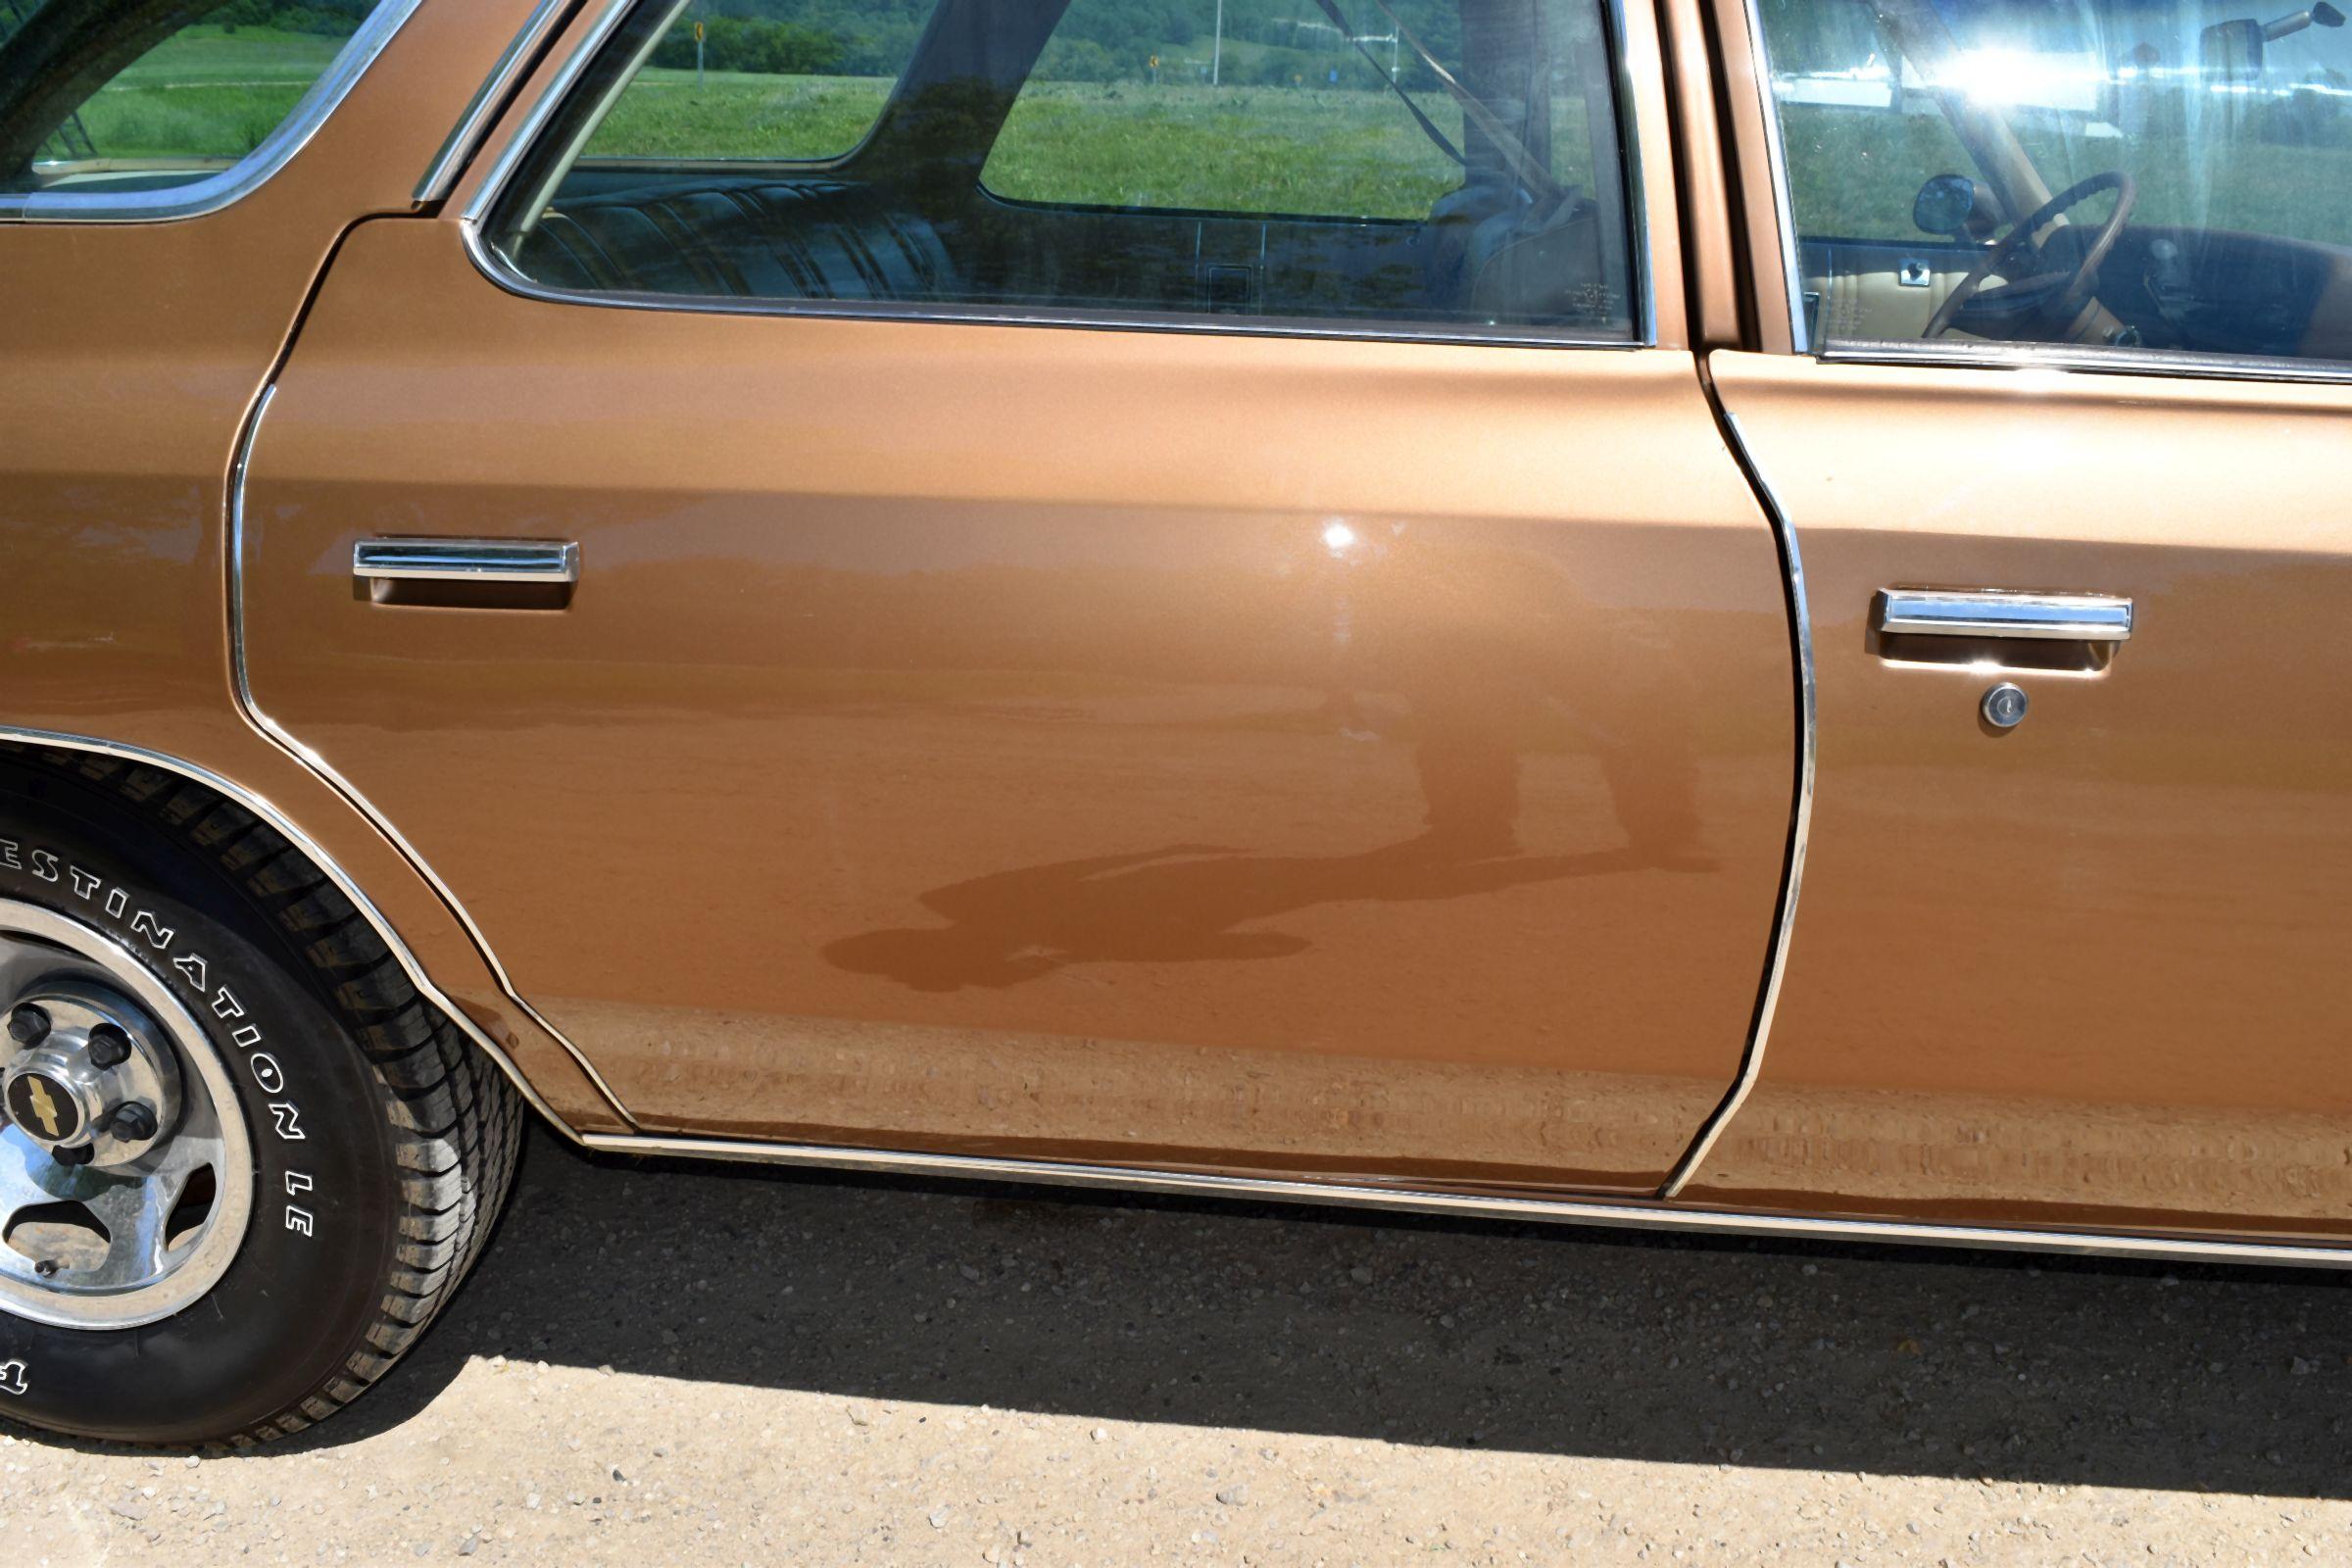 1976 Chevrolet Impala Wagon 4 Door Car, 82,885 Miles, Original Miles, 400ci Engine, Auto Transmissio